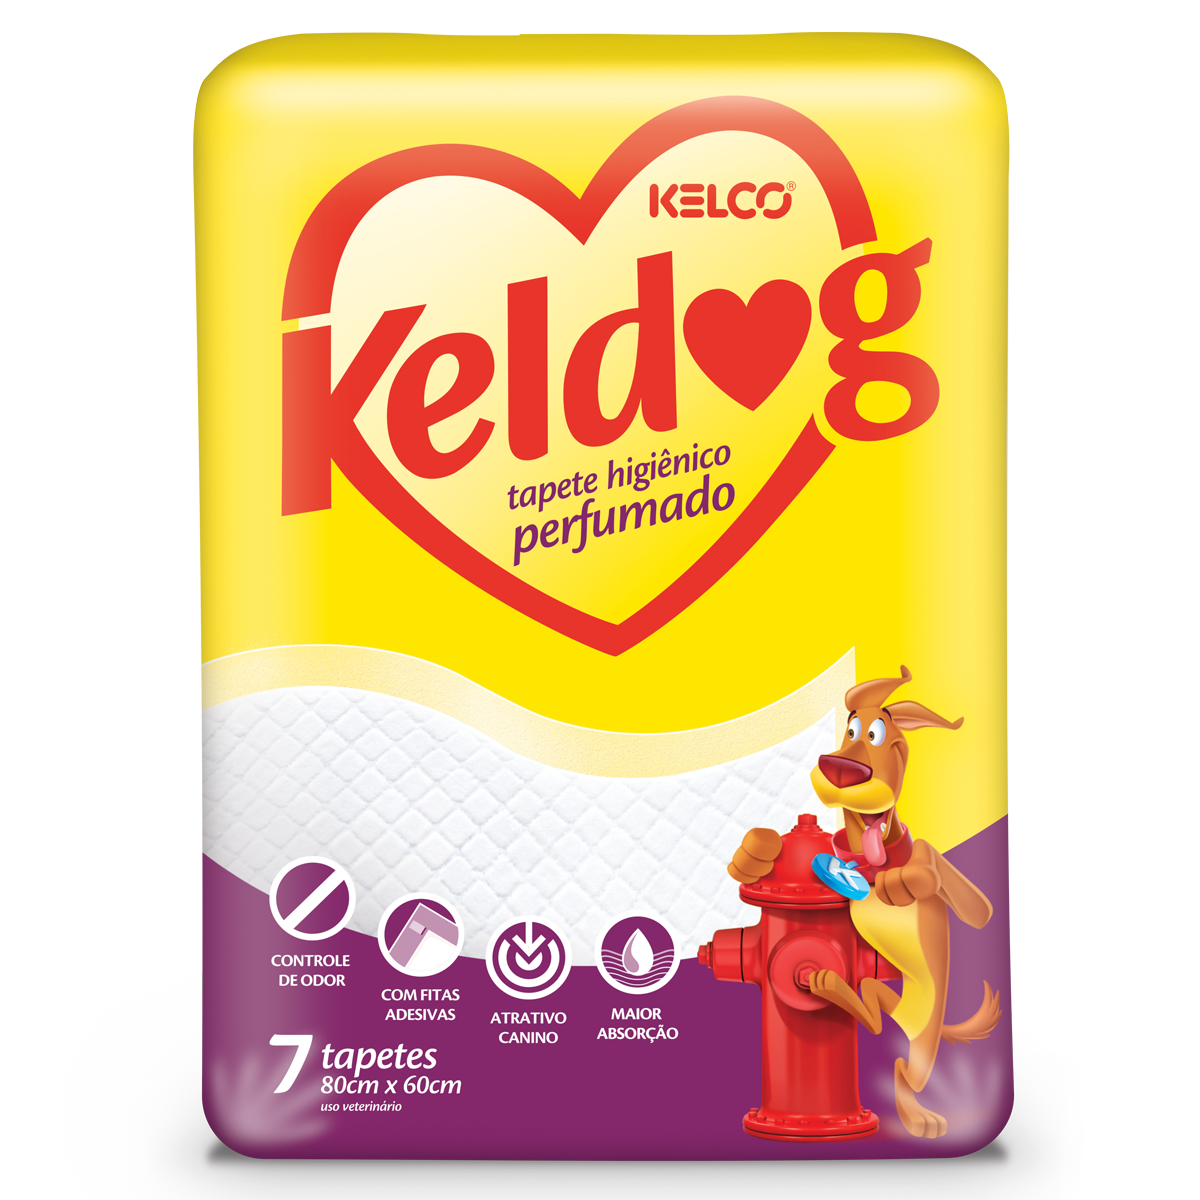 Tapete Keldog Perfumado 7 unidades